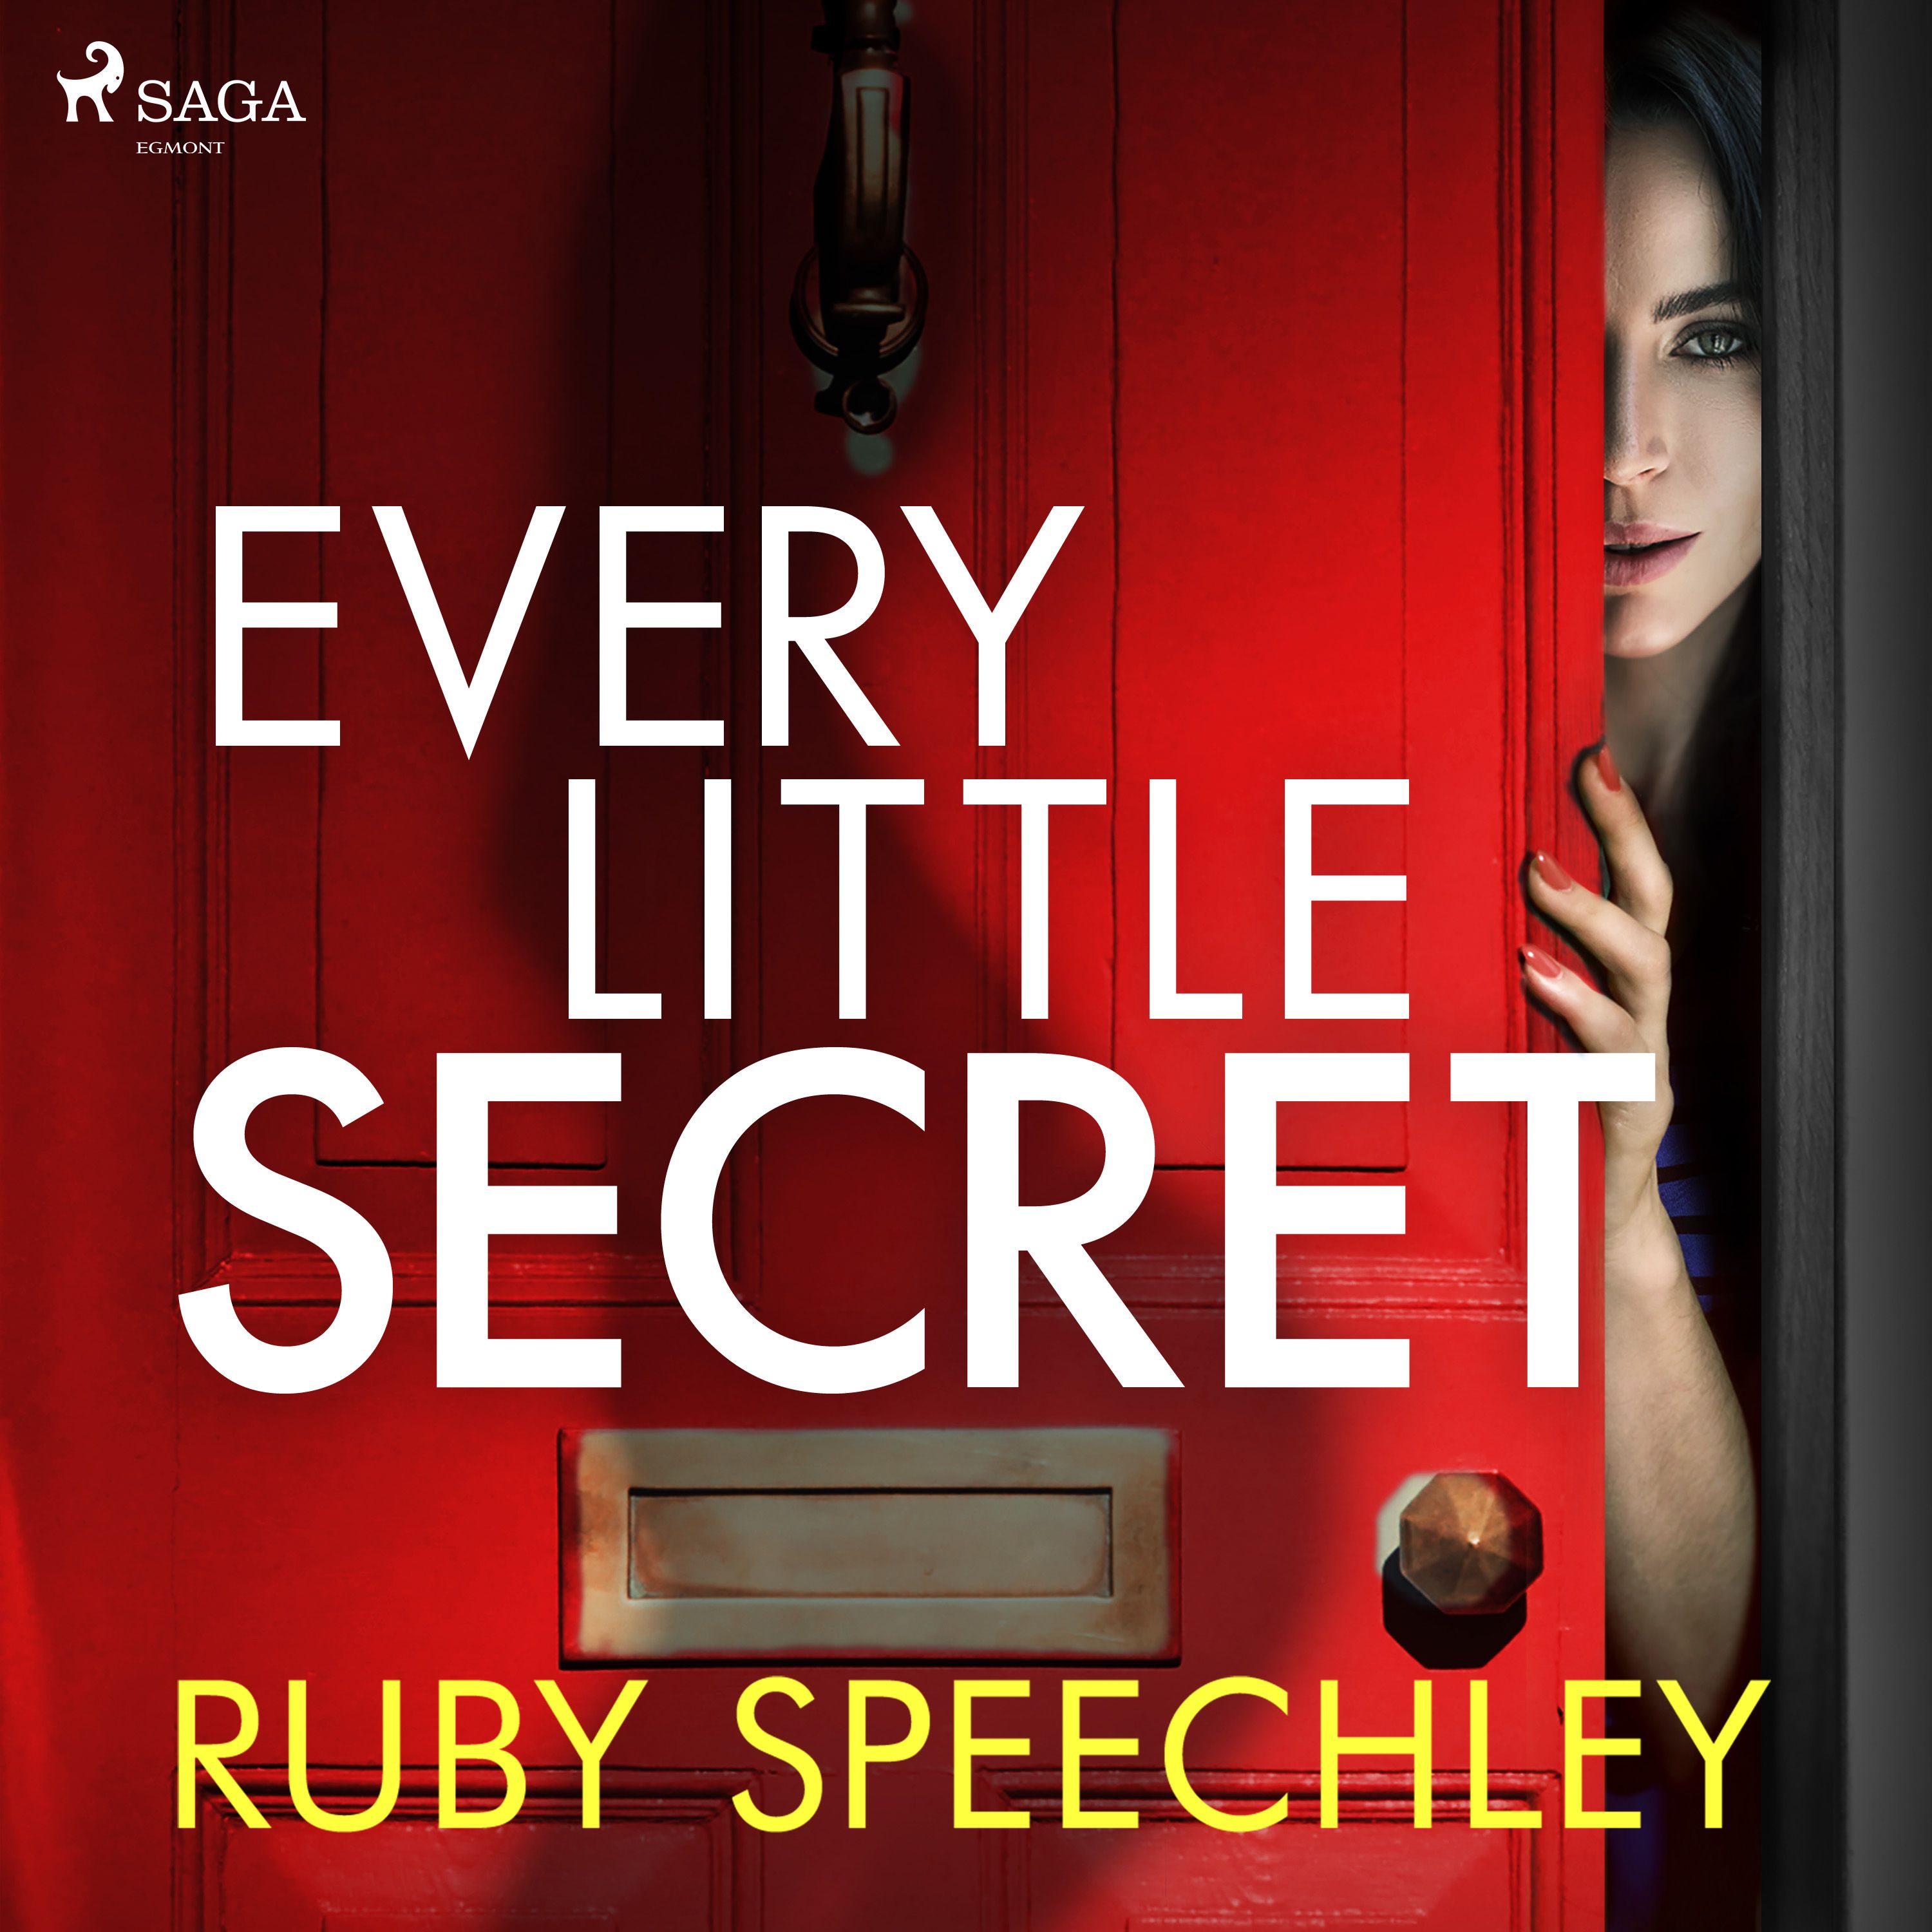 Every Little Secret, lydbog af Ruby Speechley